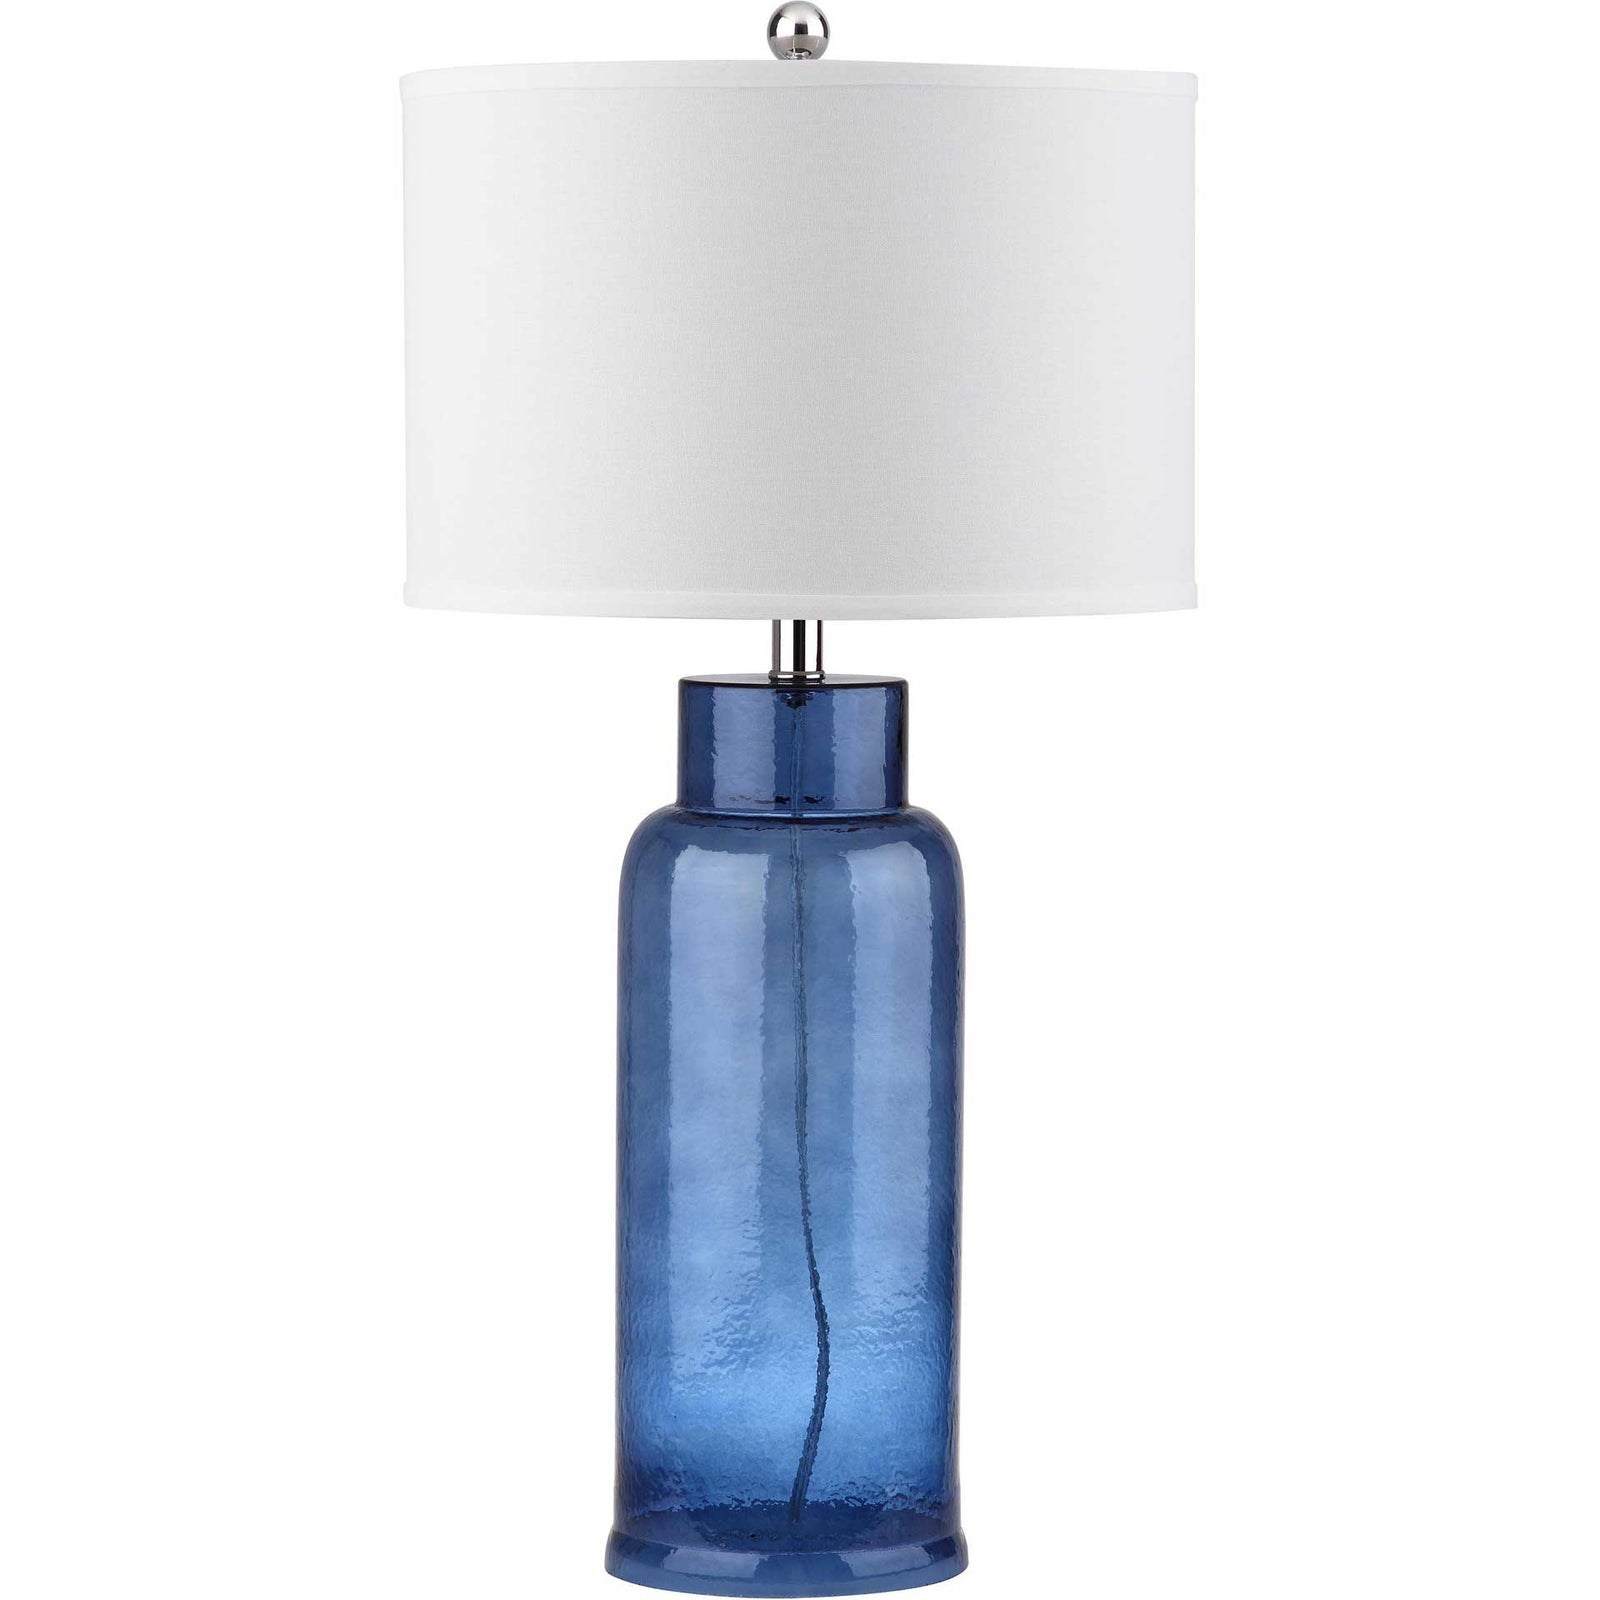 Bottle Glass Table Lamp Blue (Set of 2)